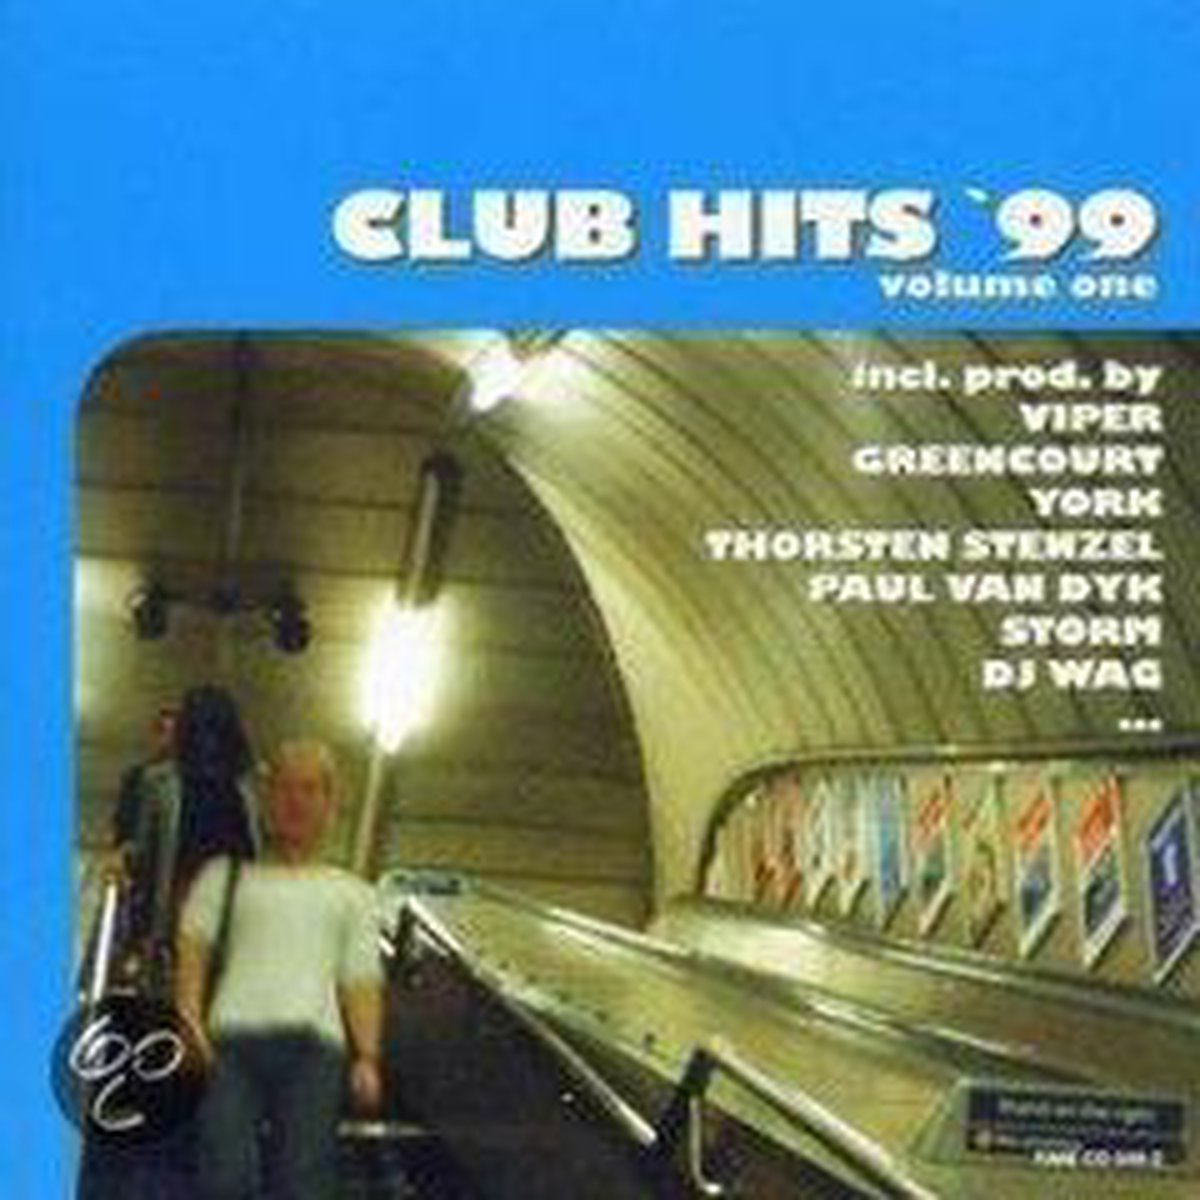 Club Hits '99 Vol. 1 - various artists